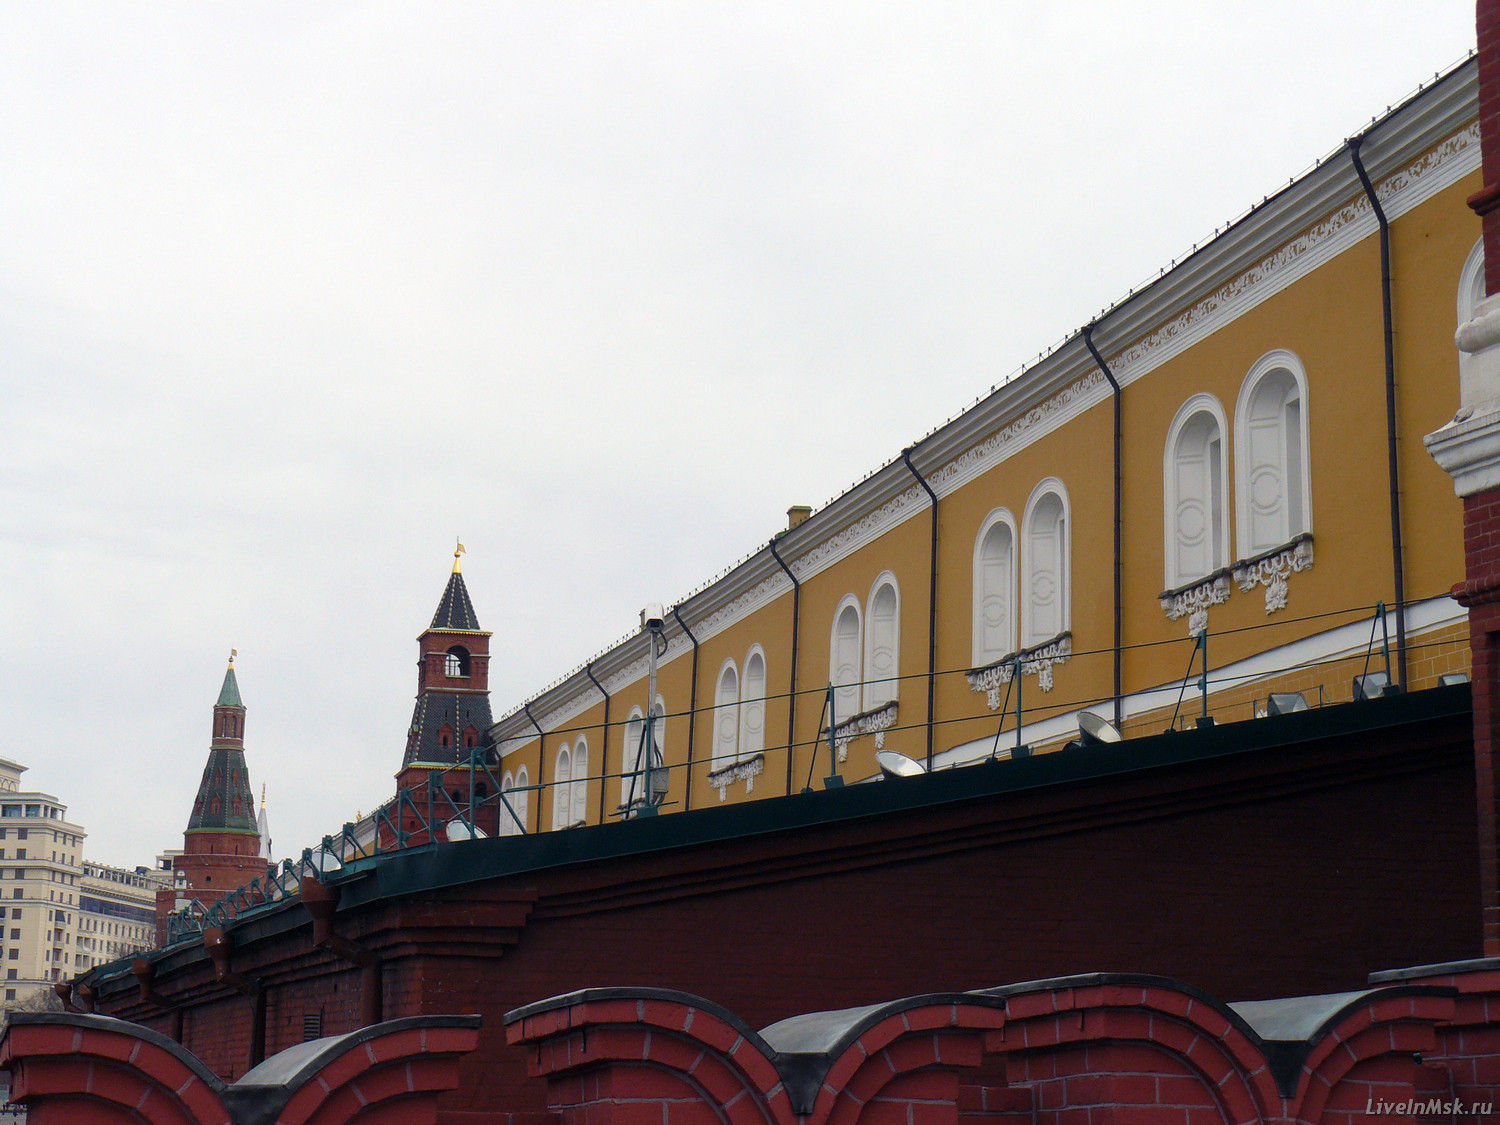 Здание Арсенала со стороны Александровского Сада, фото 2015 года